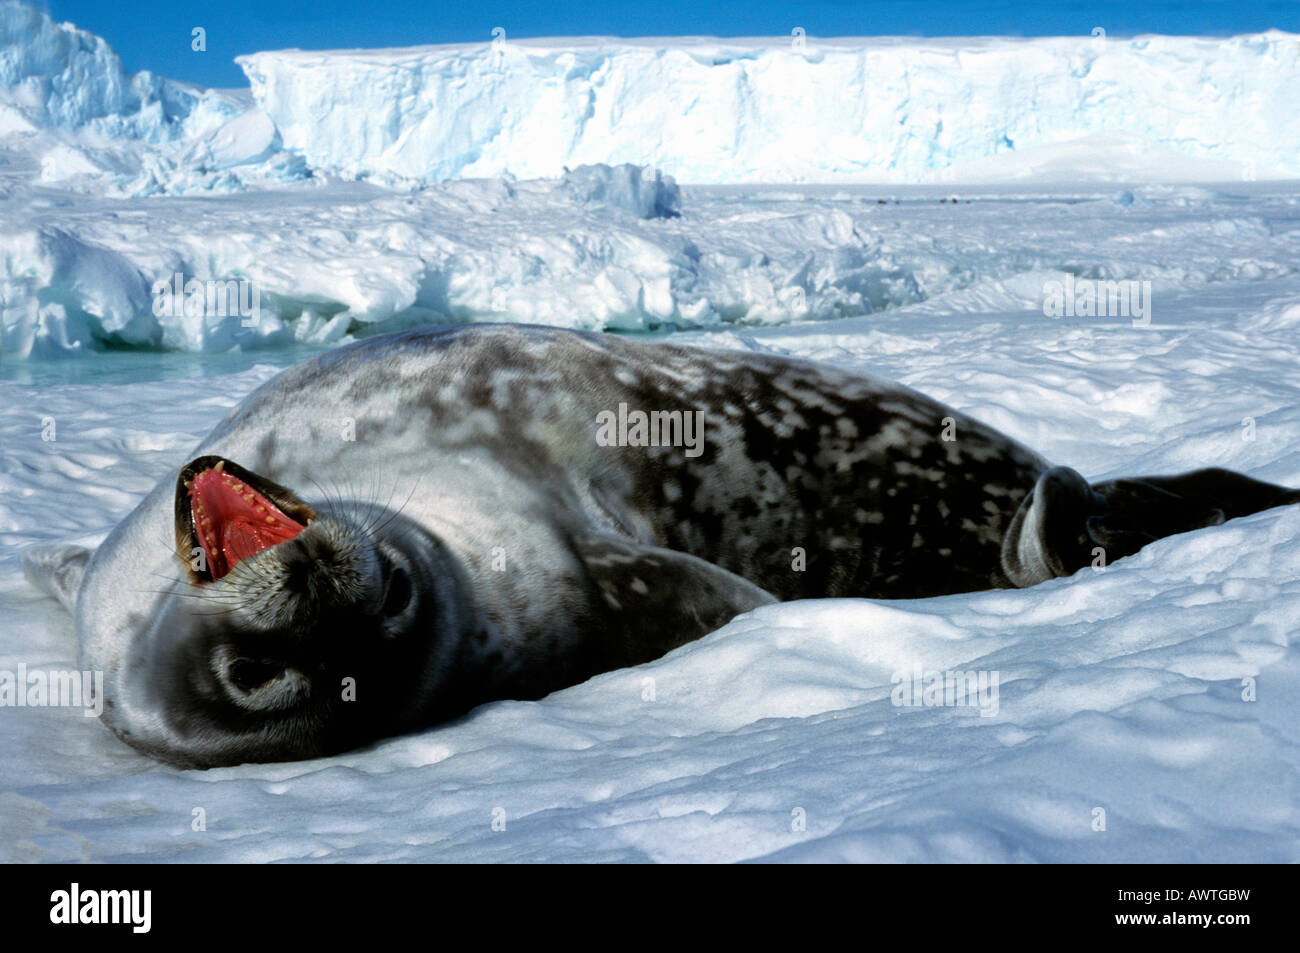 Phoque de Weddell weddell Seal Leptonychotes weddelli Antarctique Antarctique animal animaux adultes bêtes de proie forma horizontale Banque D'Images